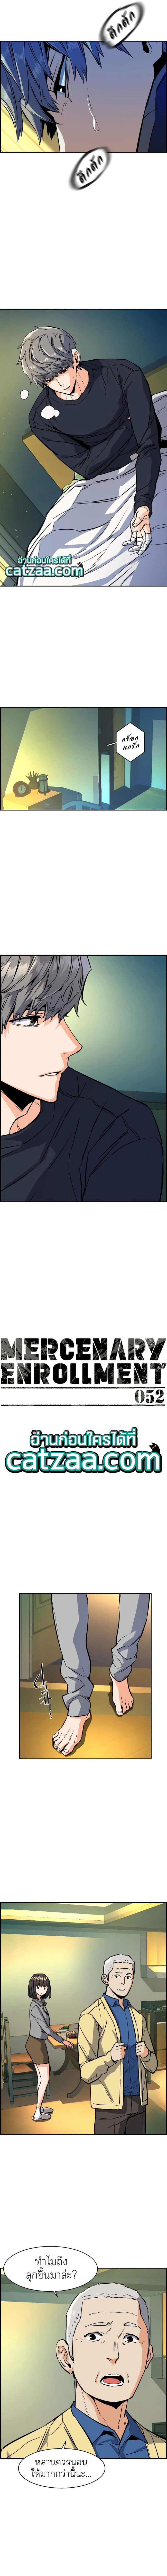 Mercenary Enrollment 52 04